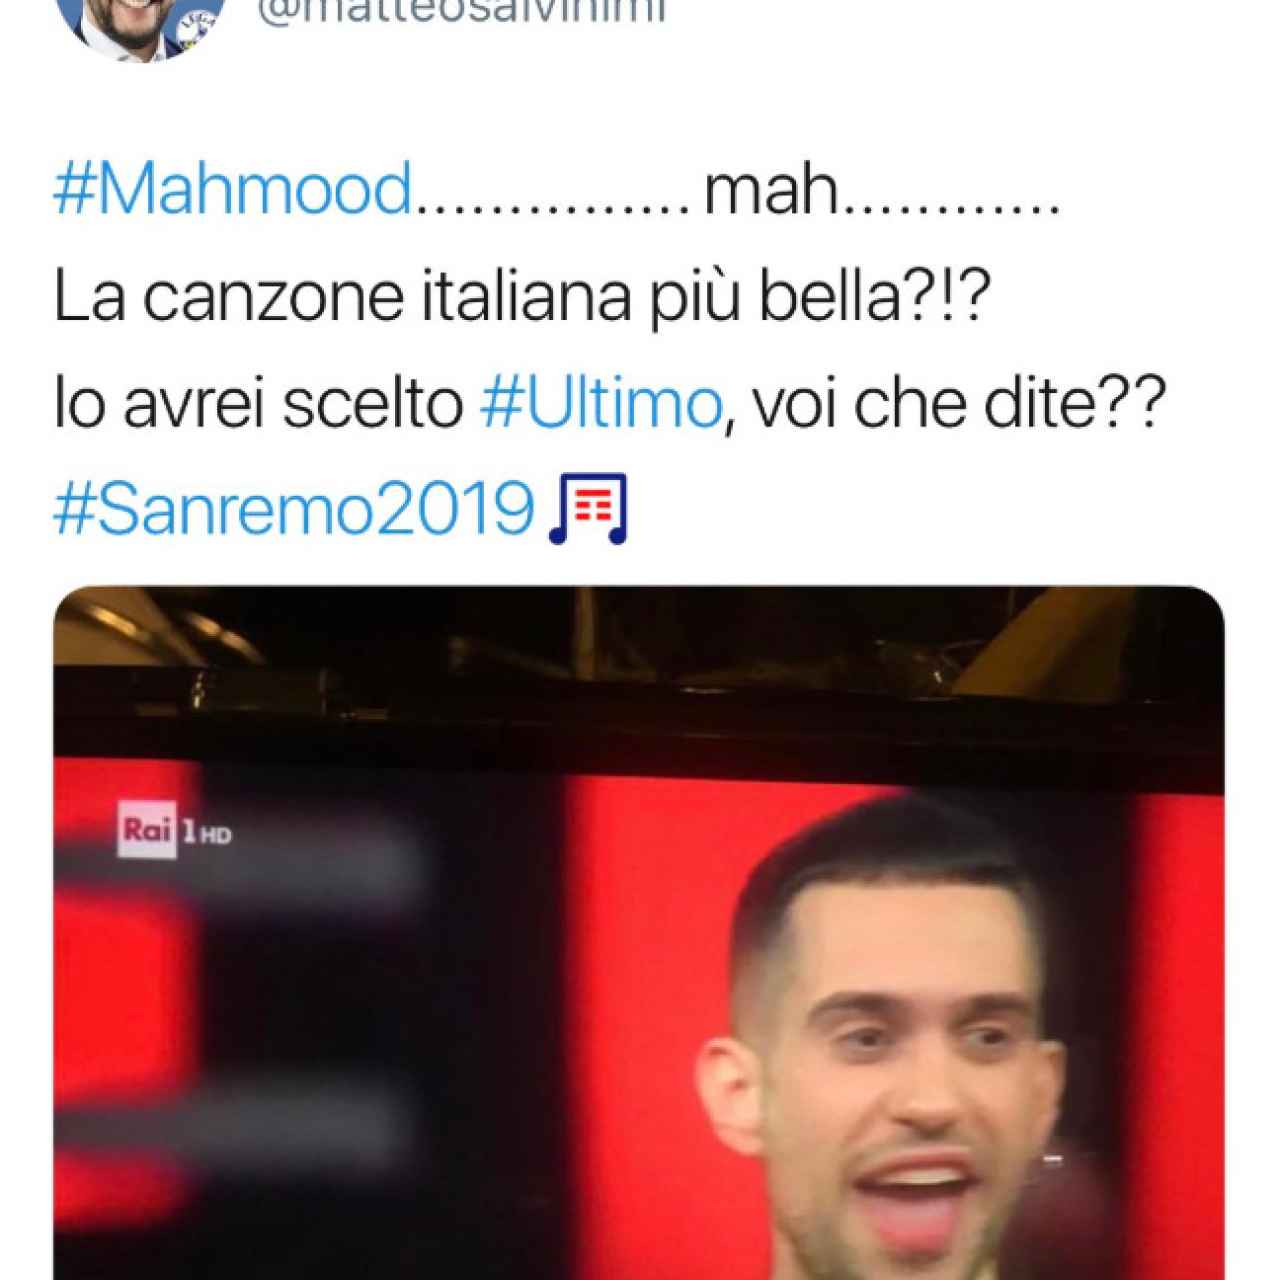 El tweet de Salvini.